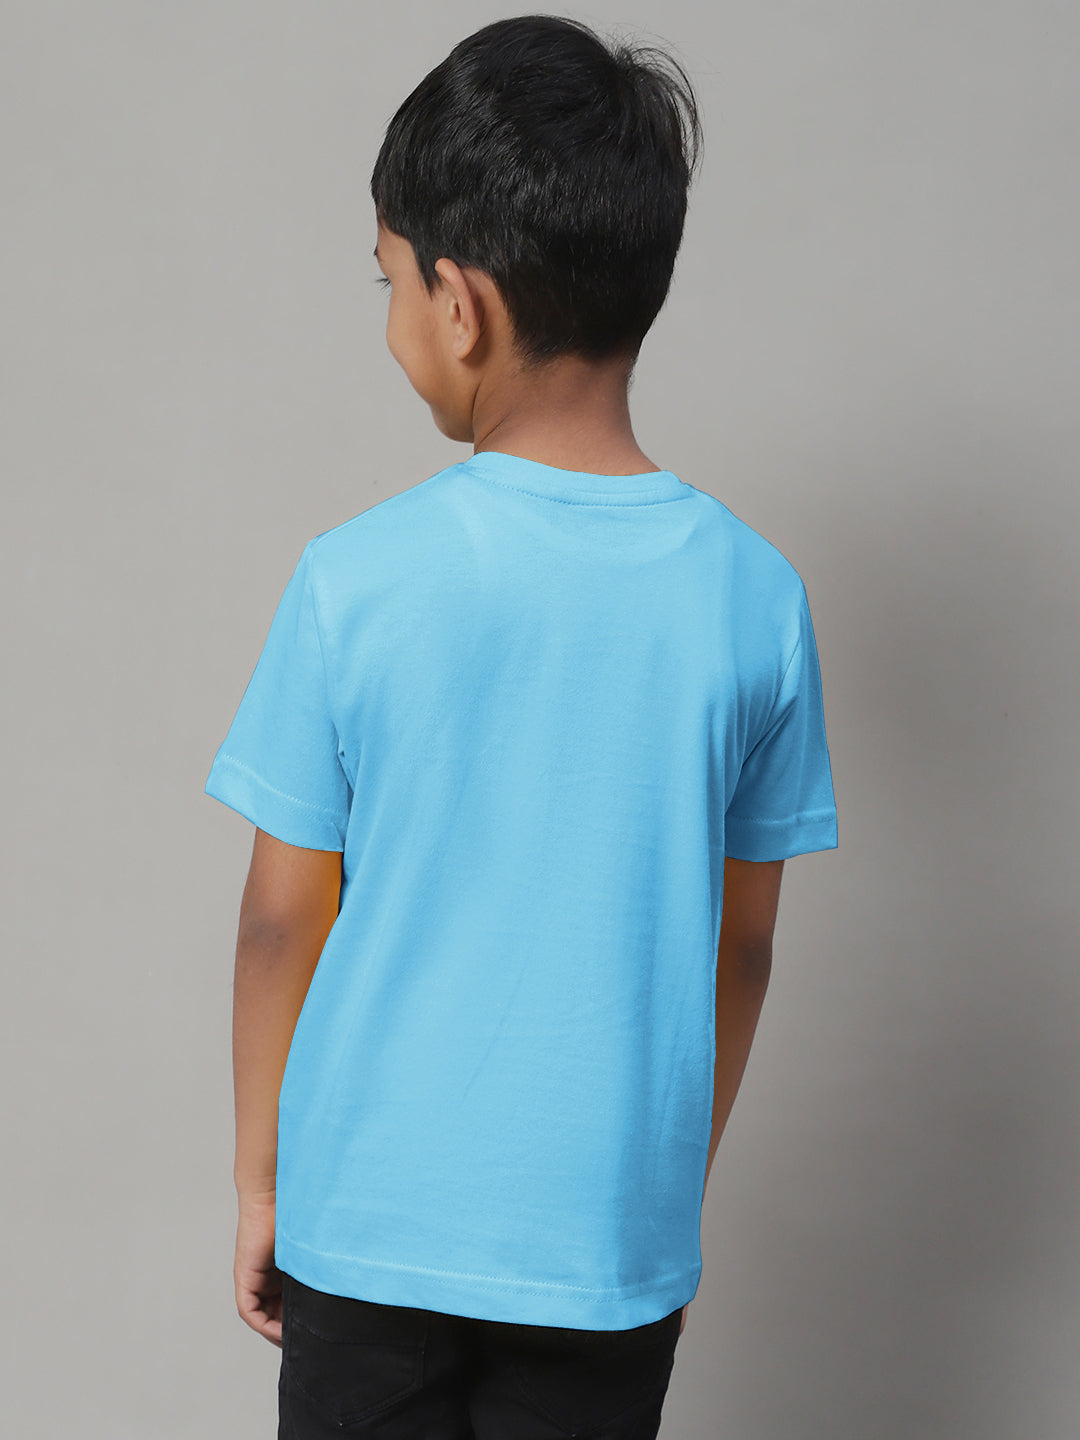 Boys Tiger Half Sleeves Printed T-Shirt - Friskers